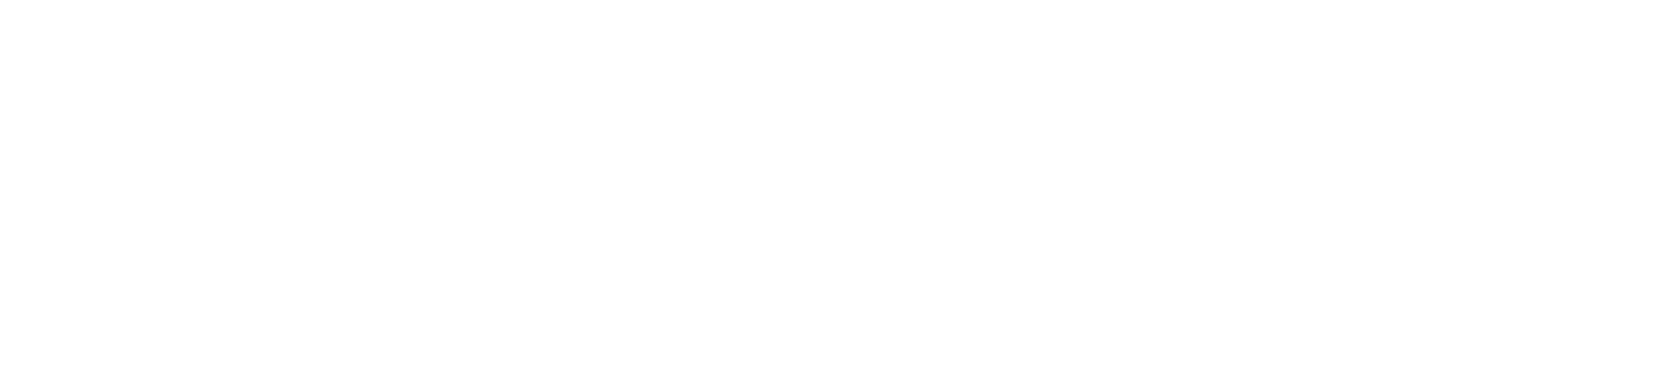 MeetGeraldine Web Maintenance Company